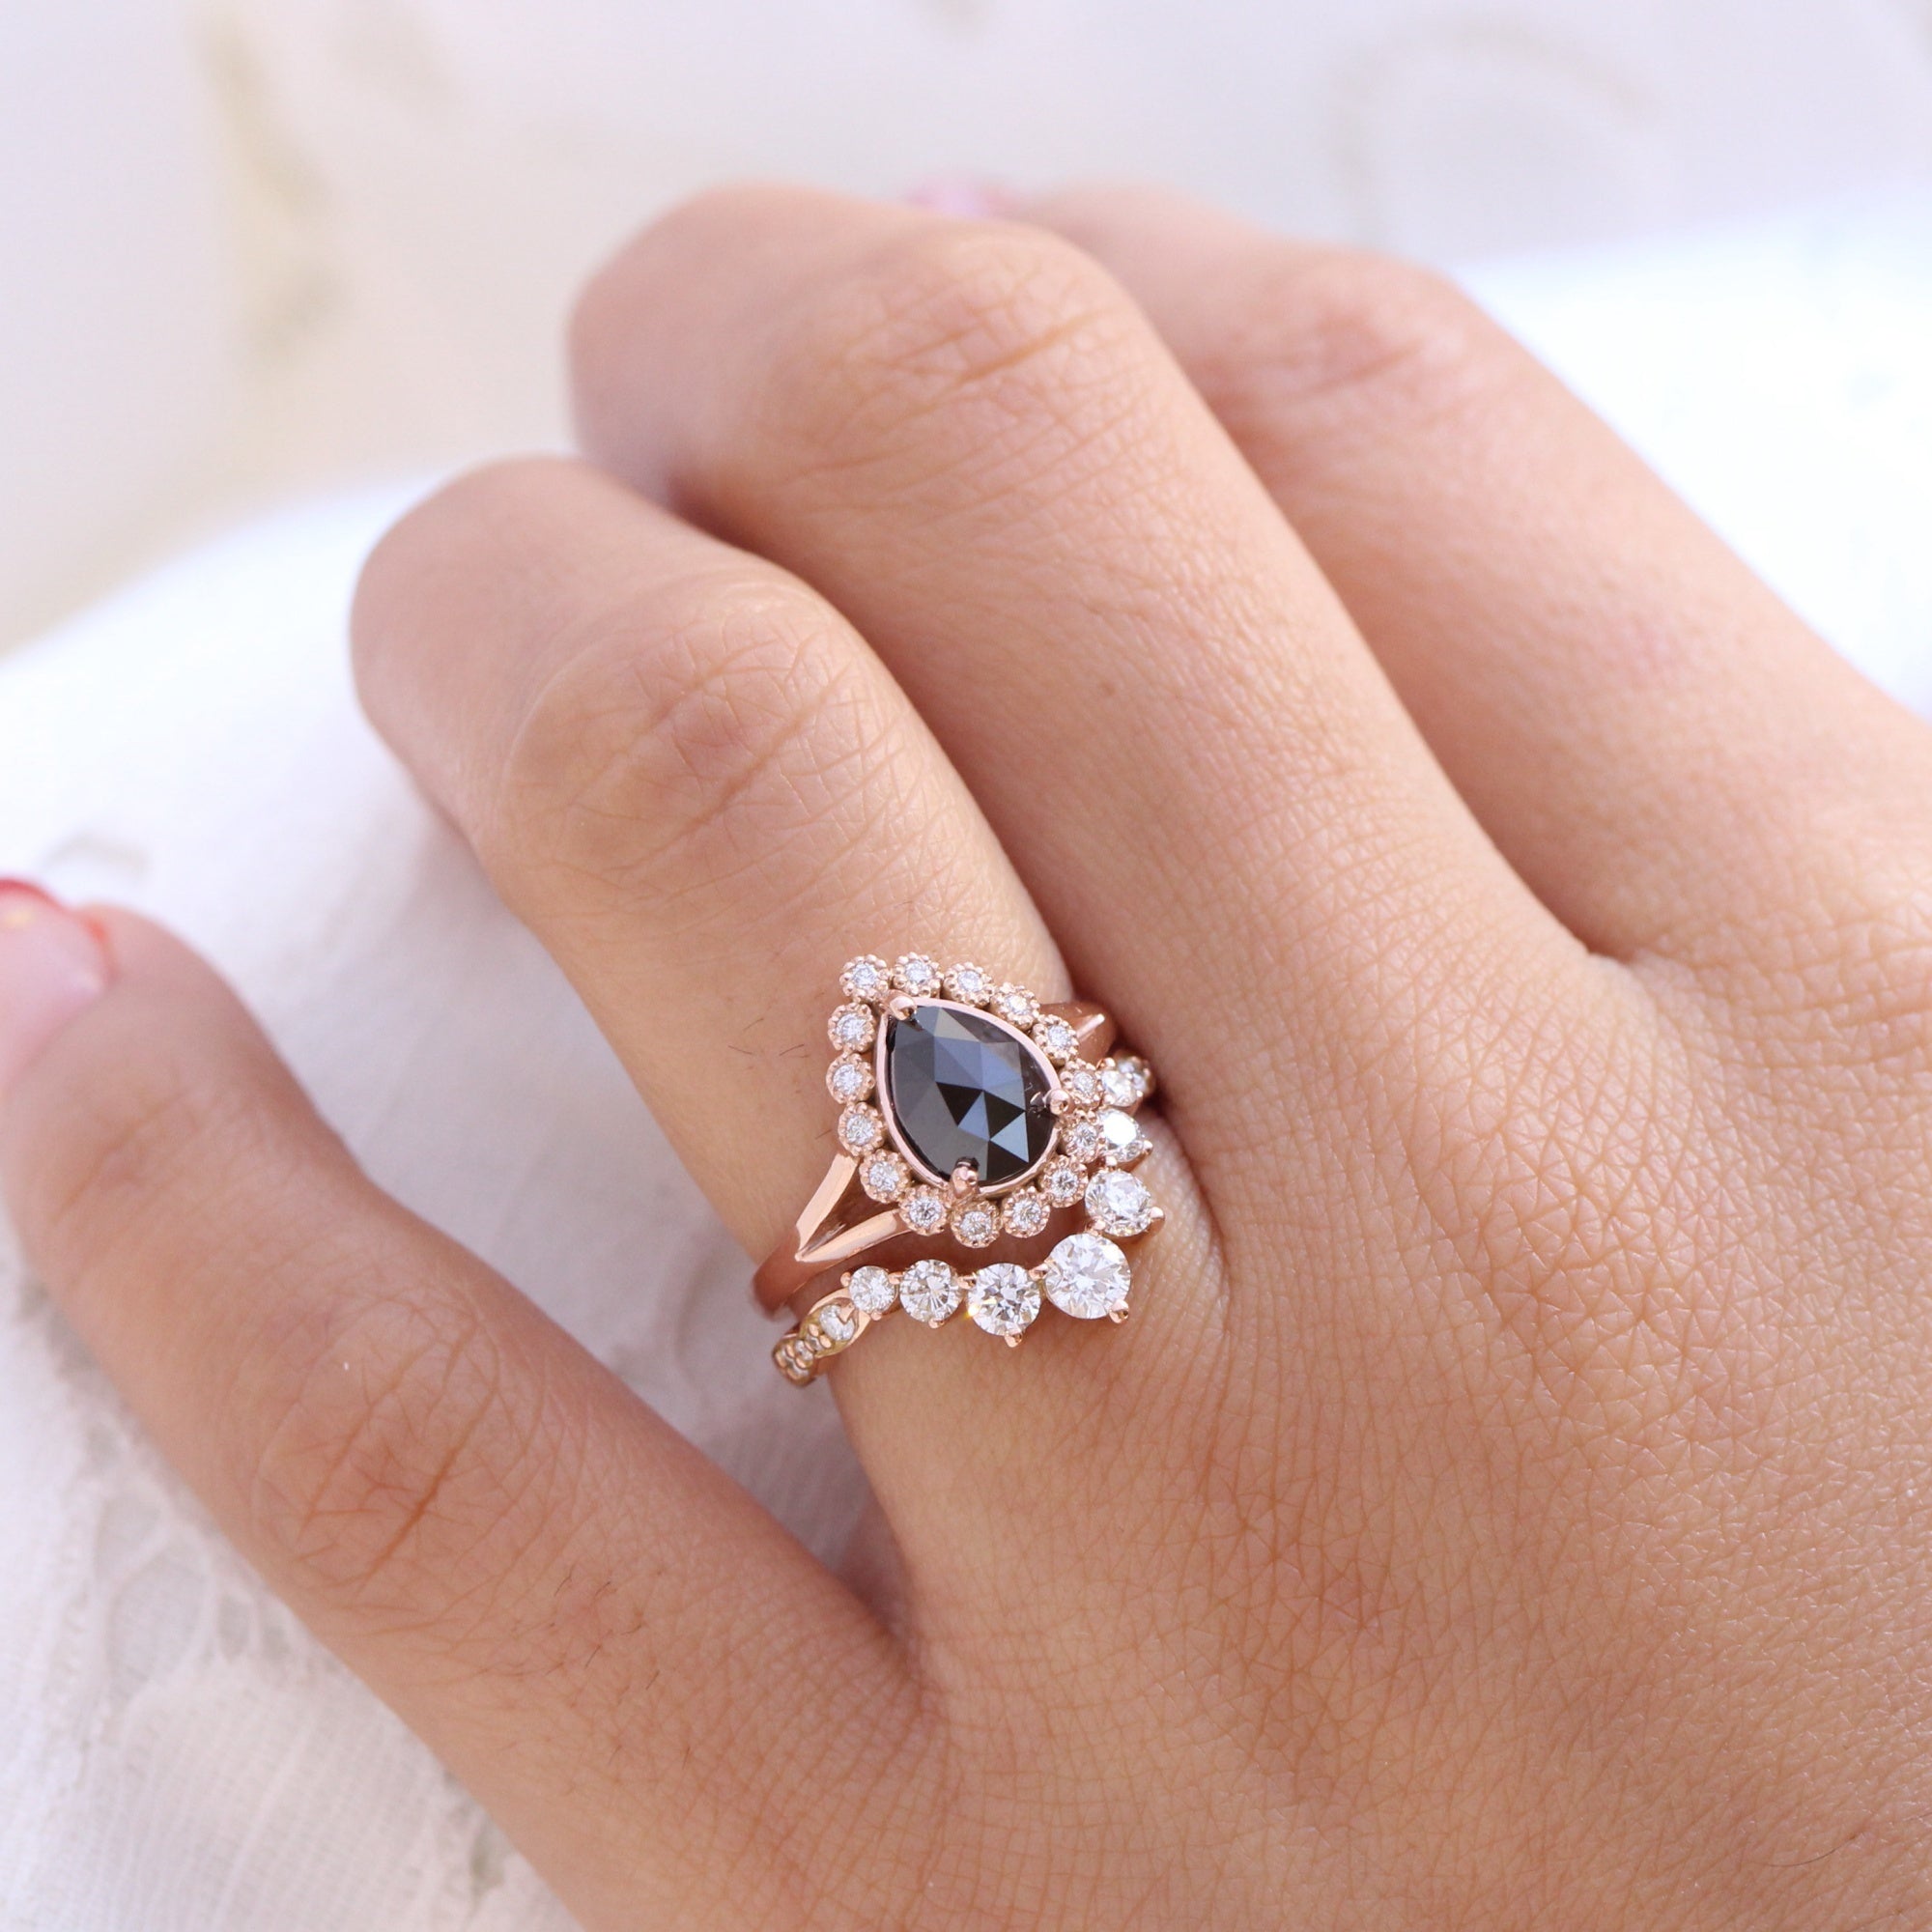 Vintage halo black diamond engagement ring rose gold large 7 diamond u wedding band la more design jewelry